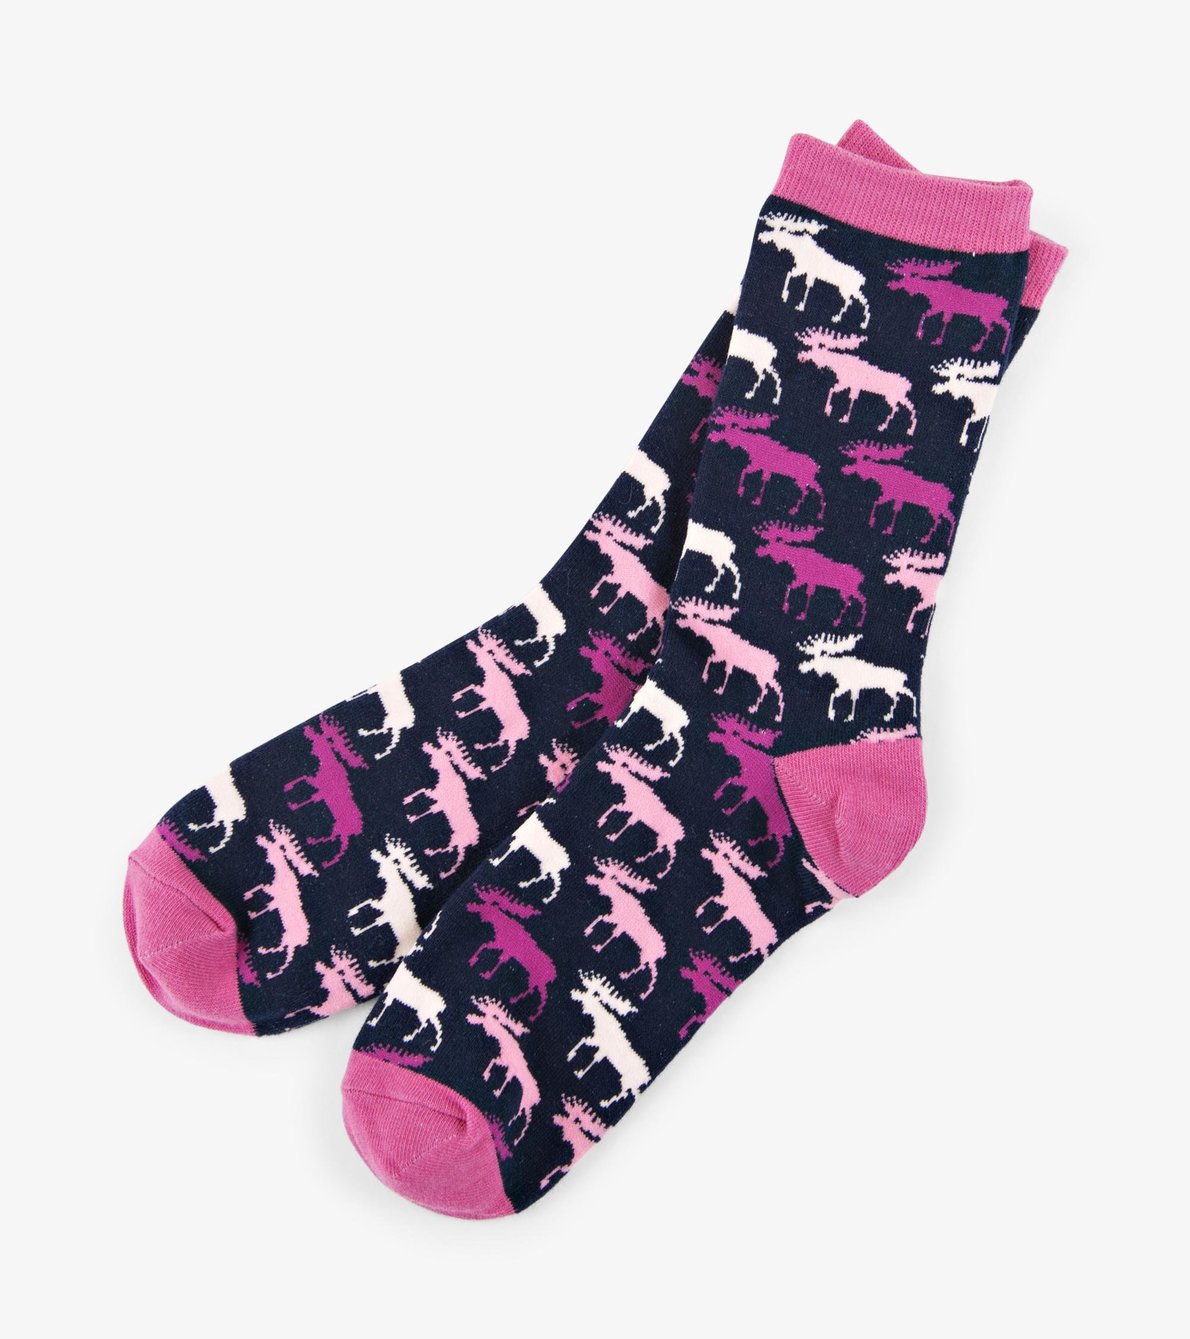 View larger image of Cottage Moose Women's Crew Socks